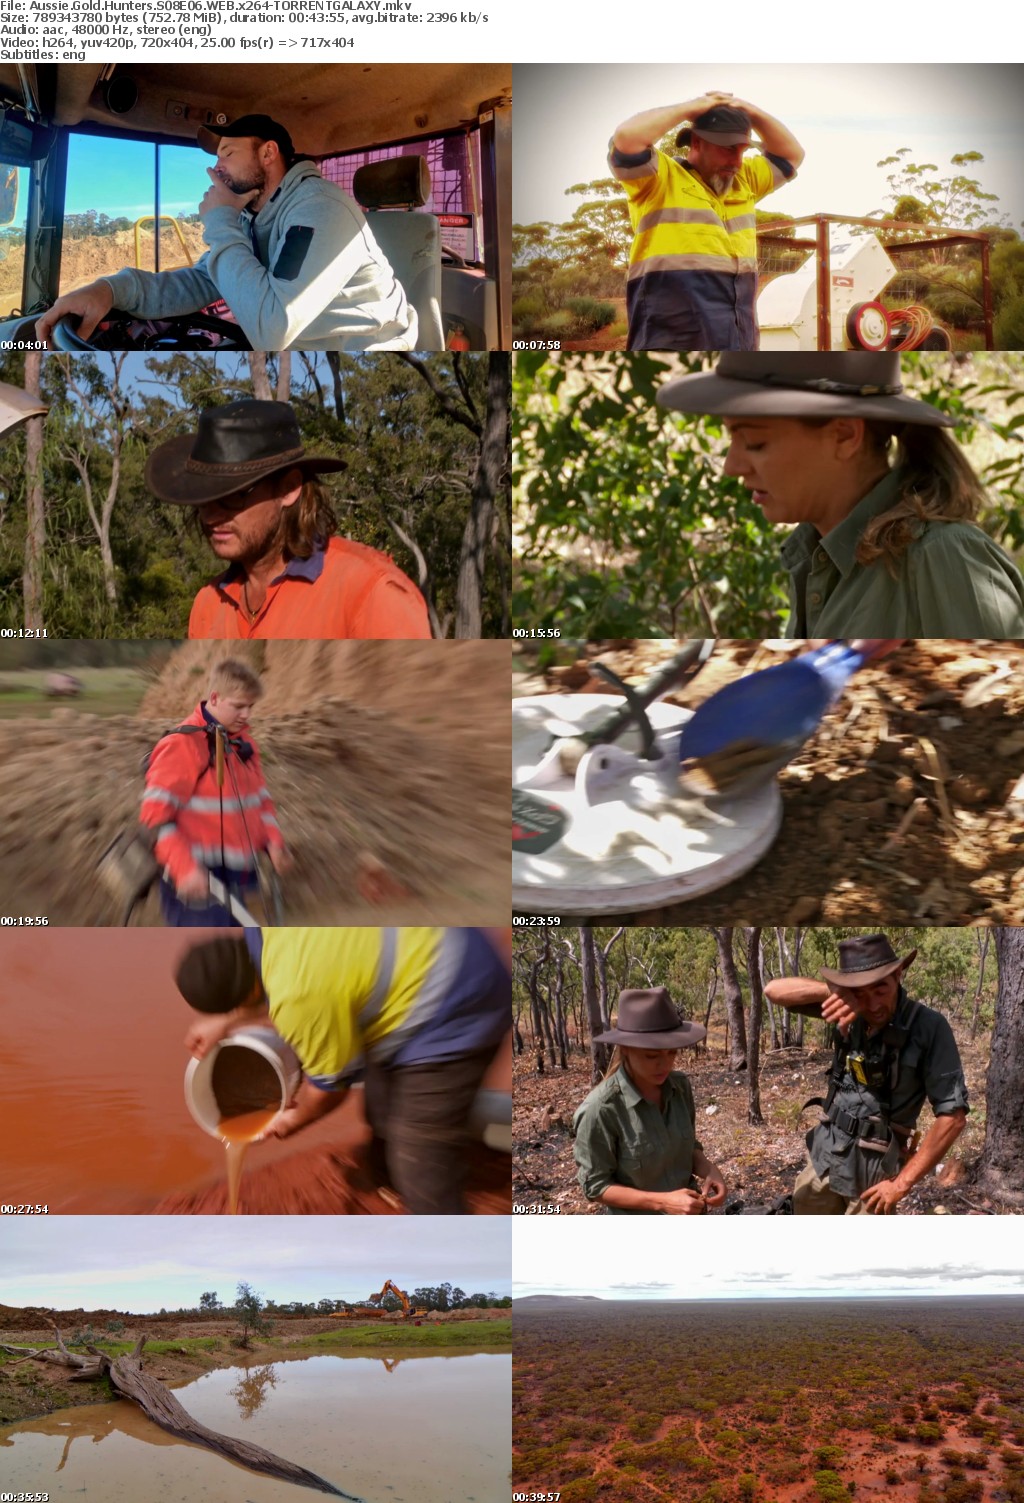 Aussie Gold Hunters S08E06 WEB x264-GALAXY